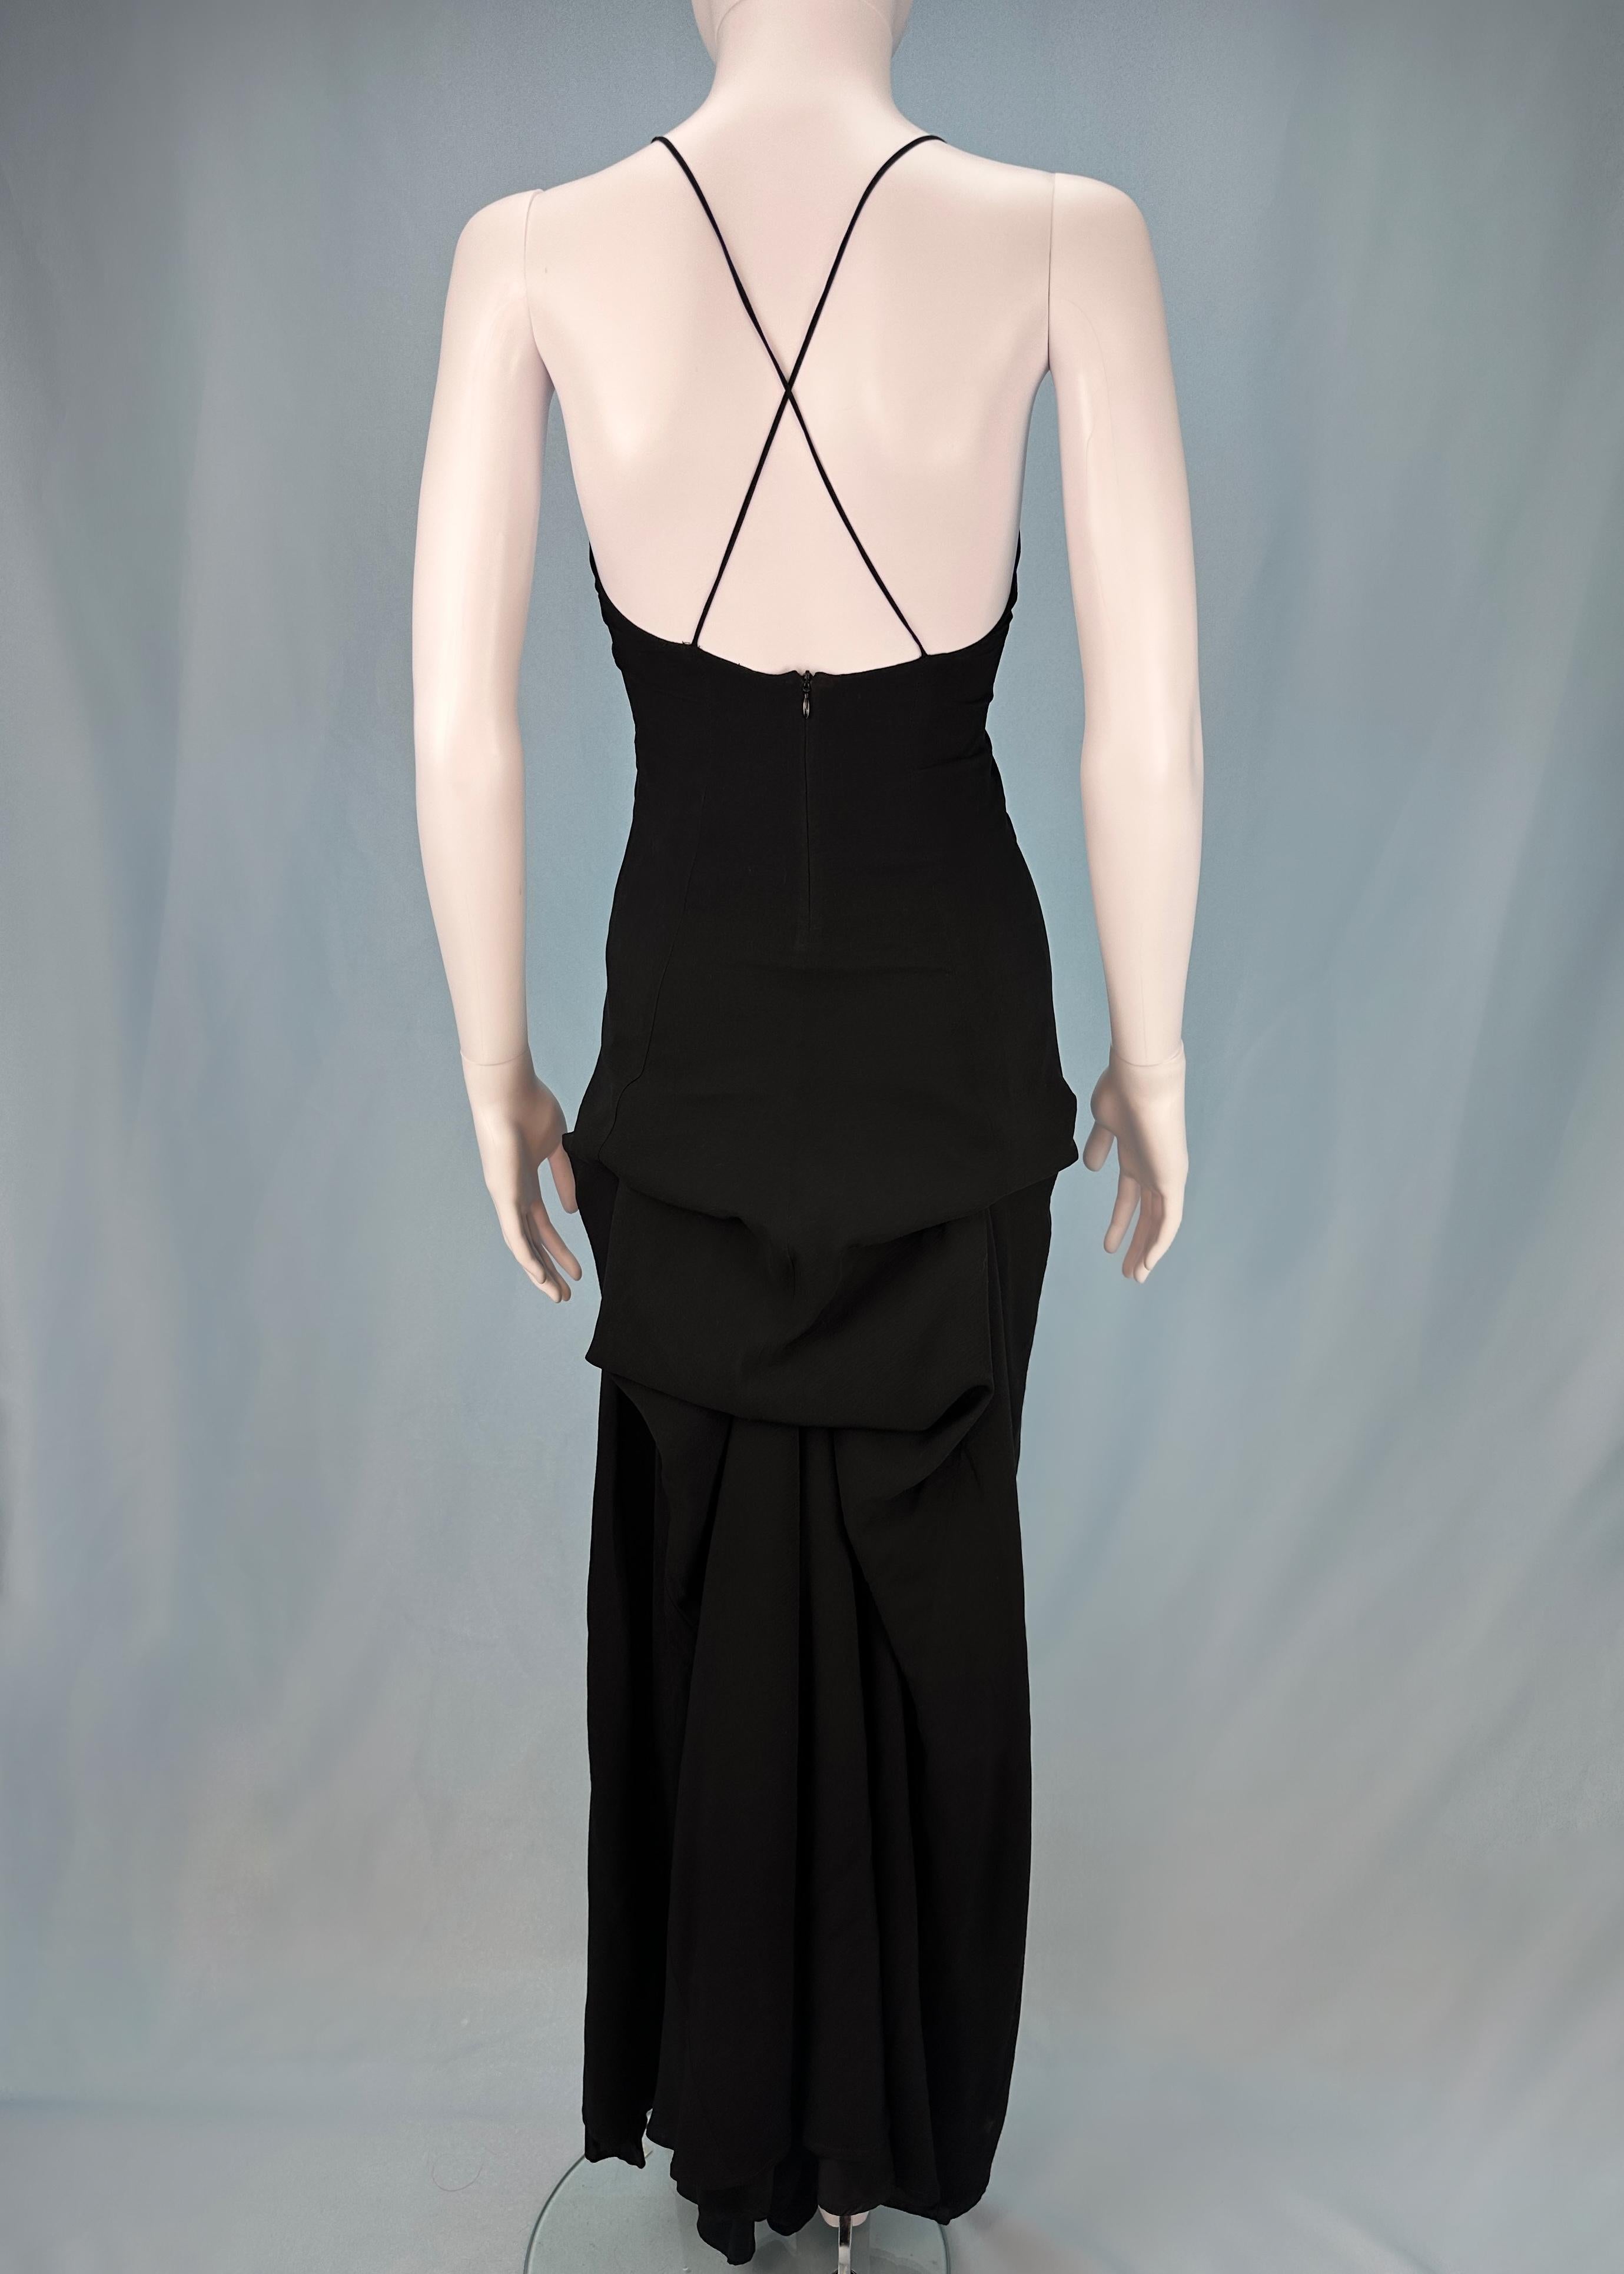 Women's Dries Van Noten Spring 1999 Runway Black Silk Bustle Dress For Sale